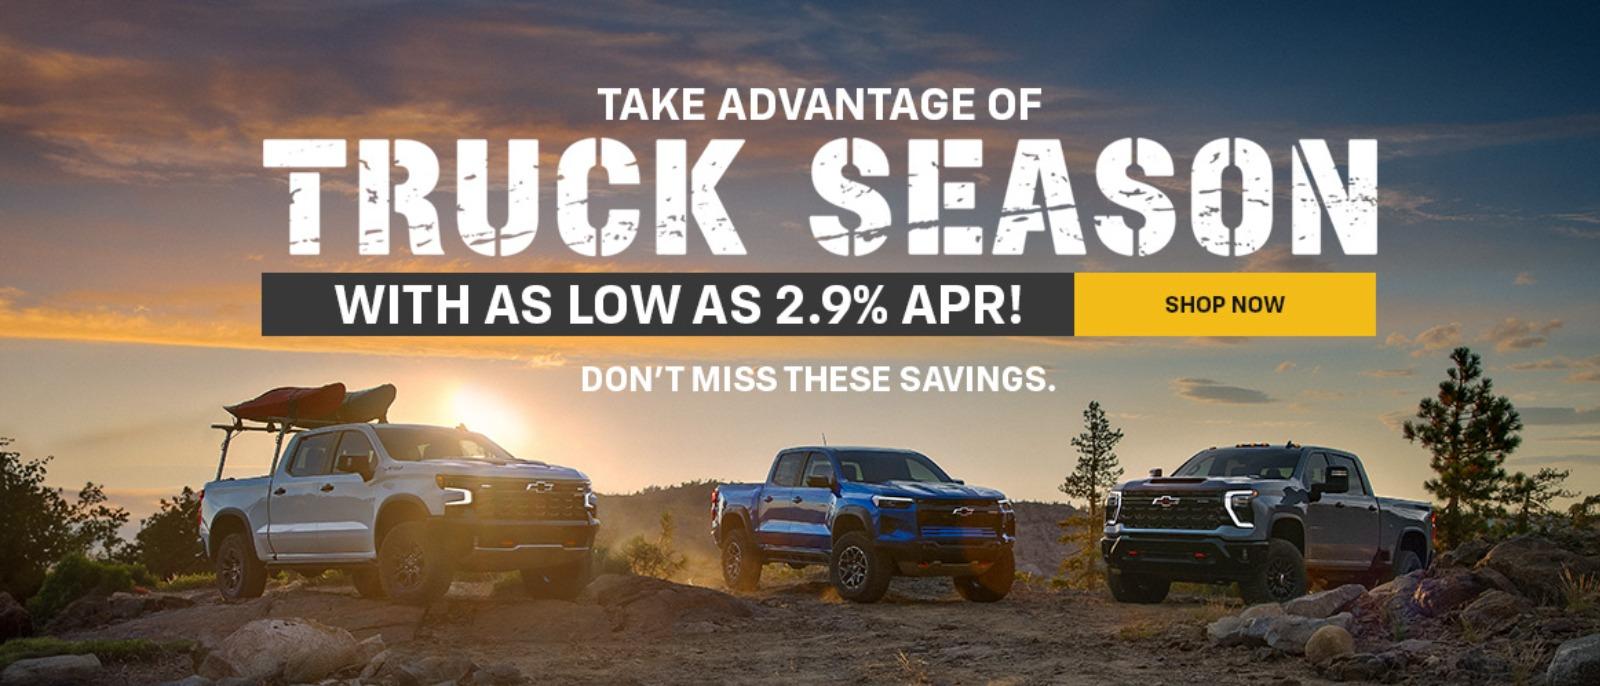 2.9% APR for Truck Season Specials